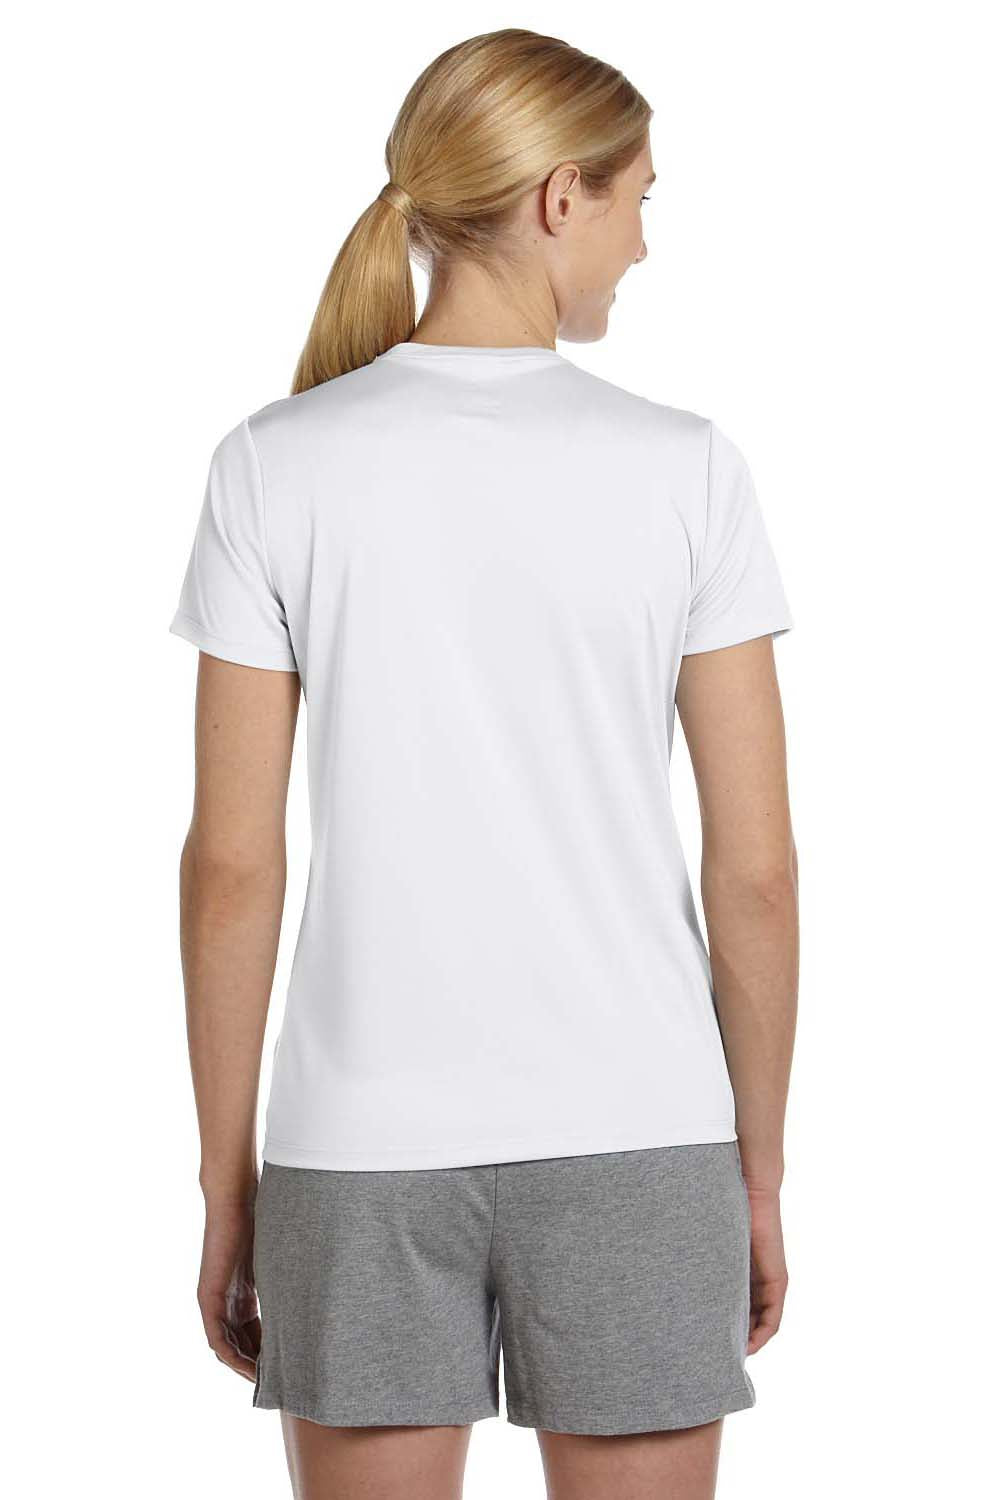 Hanes 4830 Womens Cool DRI FreshIQ Moisture Wicking Short Sleeve Crewneck T-Shirt White Back